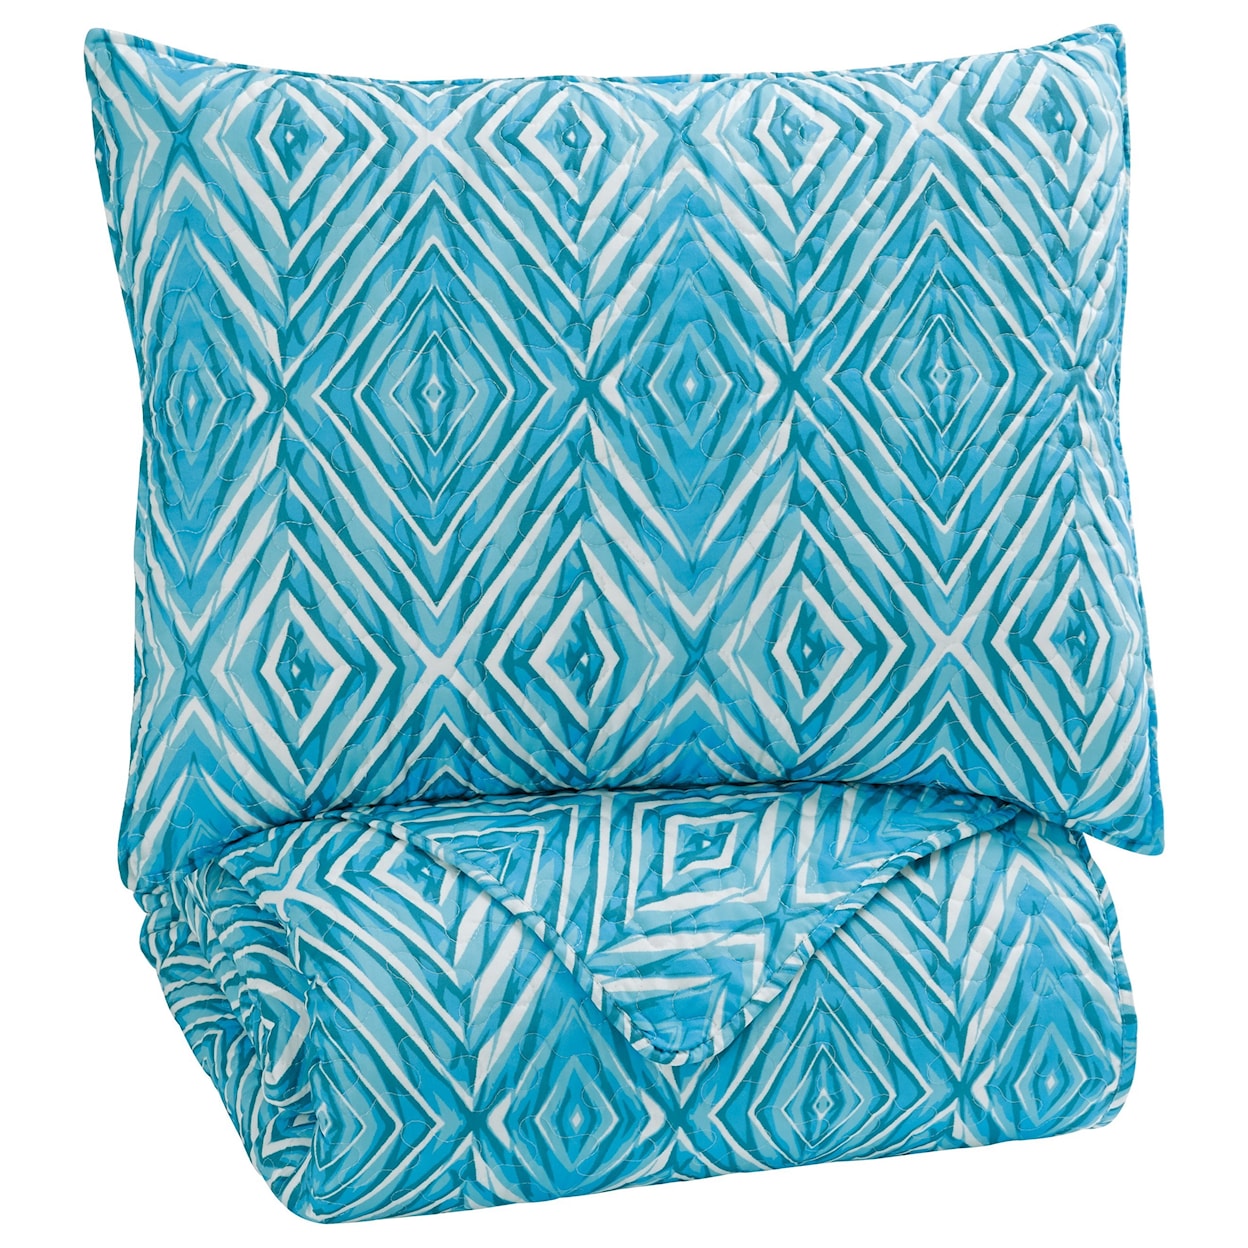 Ashley Furniture Signature Design Bedding Sets Twin Jolana Turquoise Quilt Set